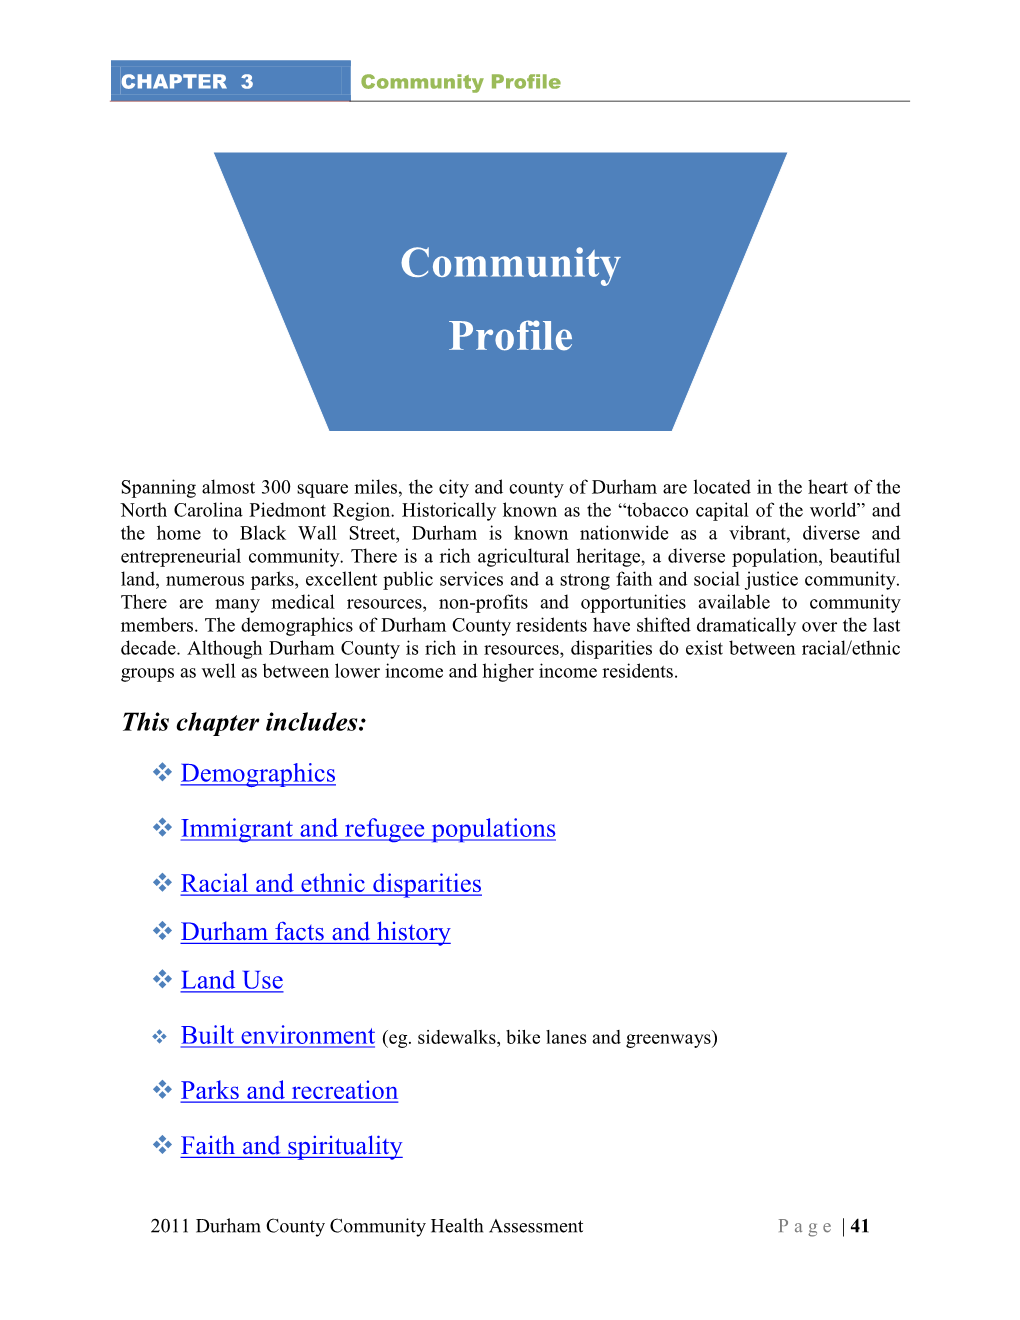 Chapter 3: Community Profile